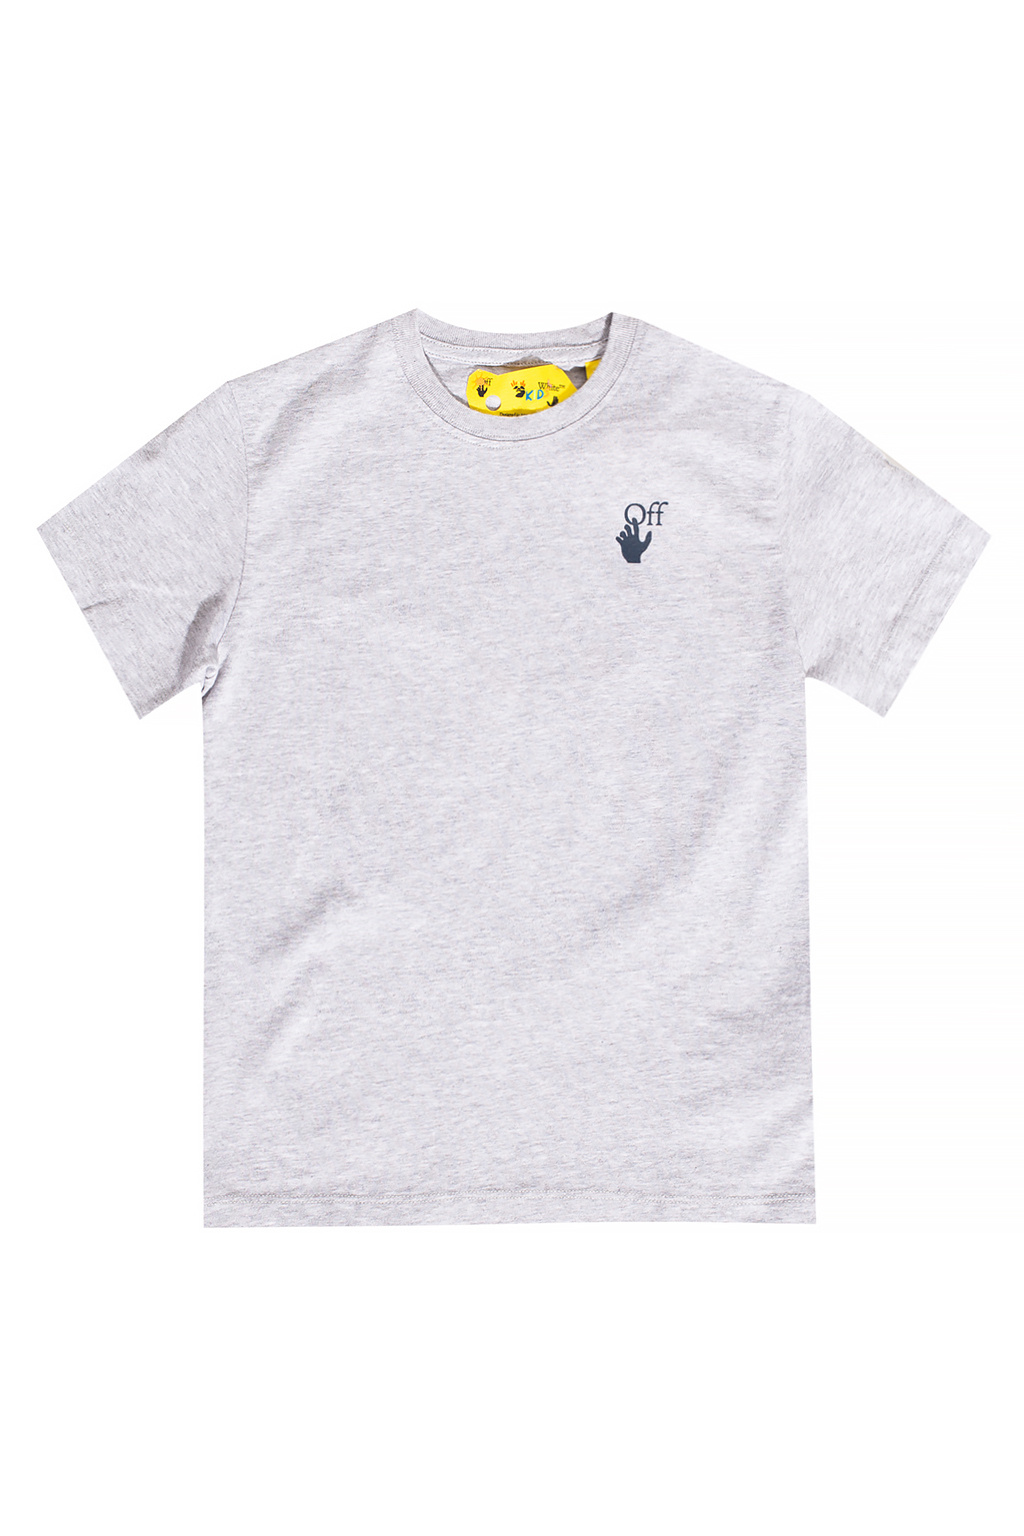 IetpShops Sweden - White Kids shirt - T-Shirt Icon Scott T Off logo - Kurzarm with - Grey